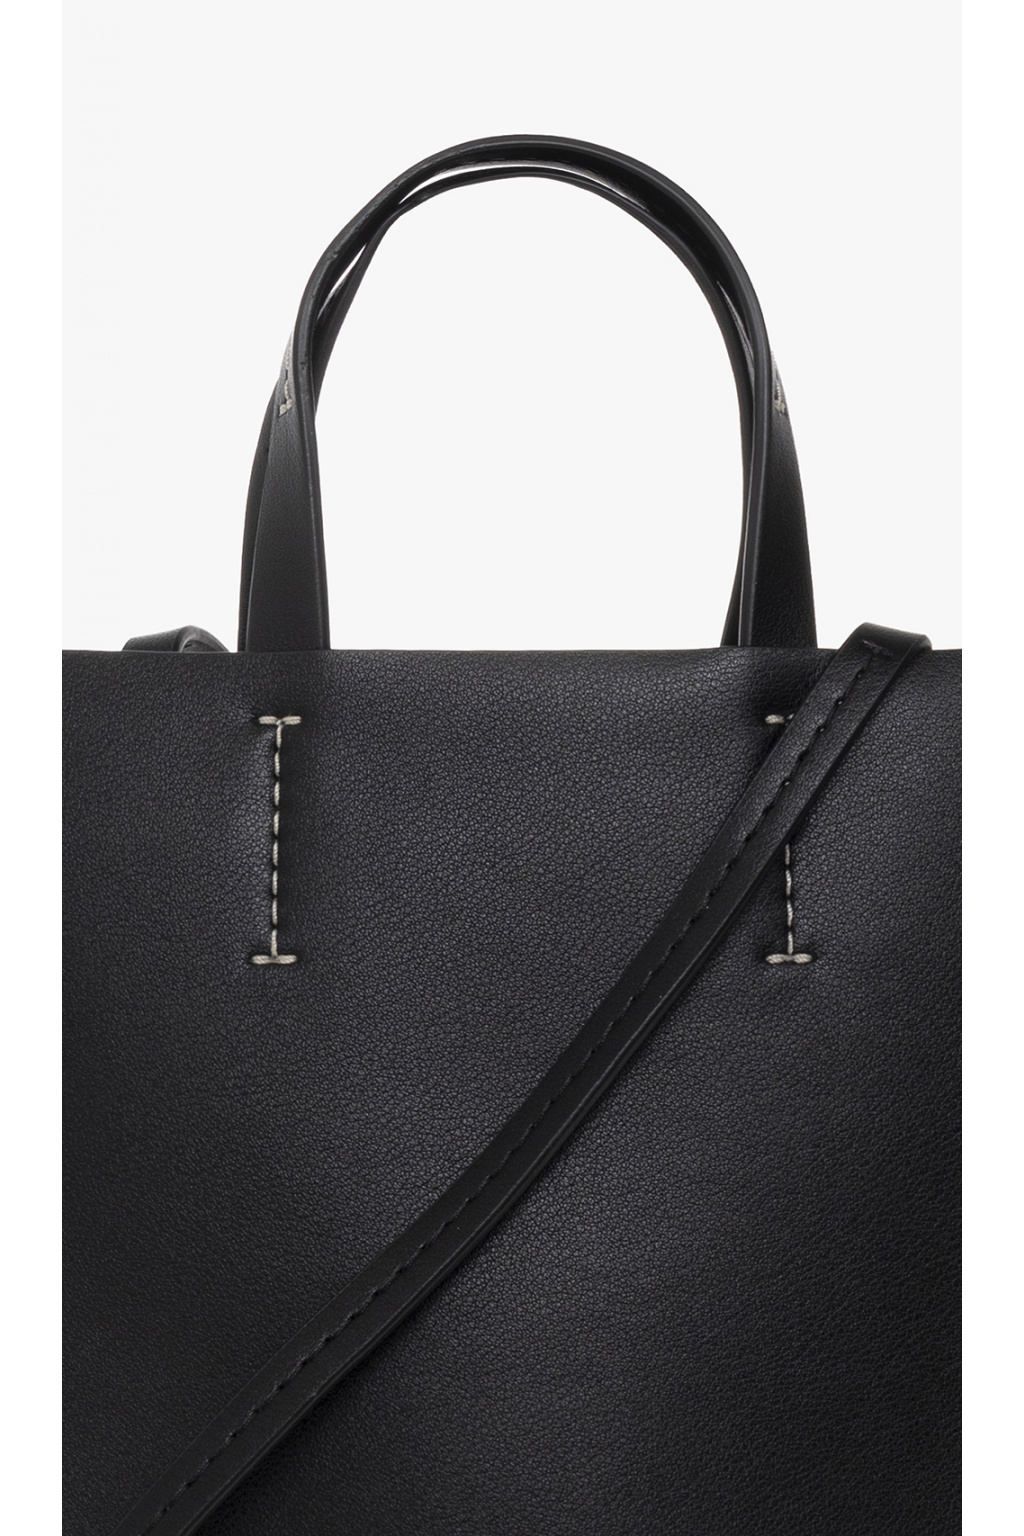 Proenza Schouler White Label 'Accordion' shoulder bag, Women's Bags